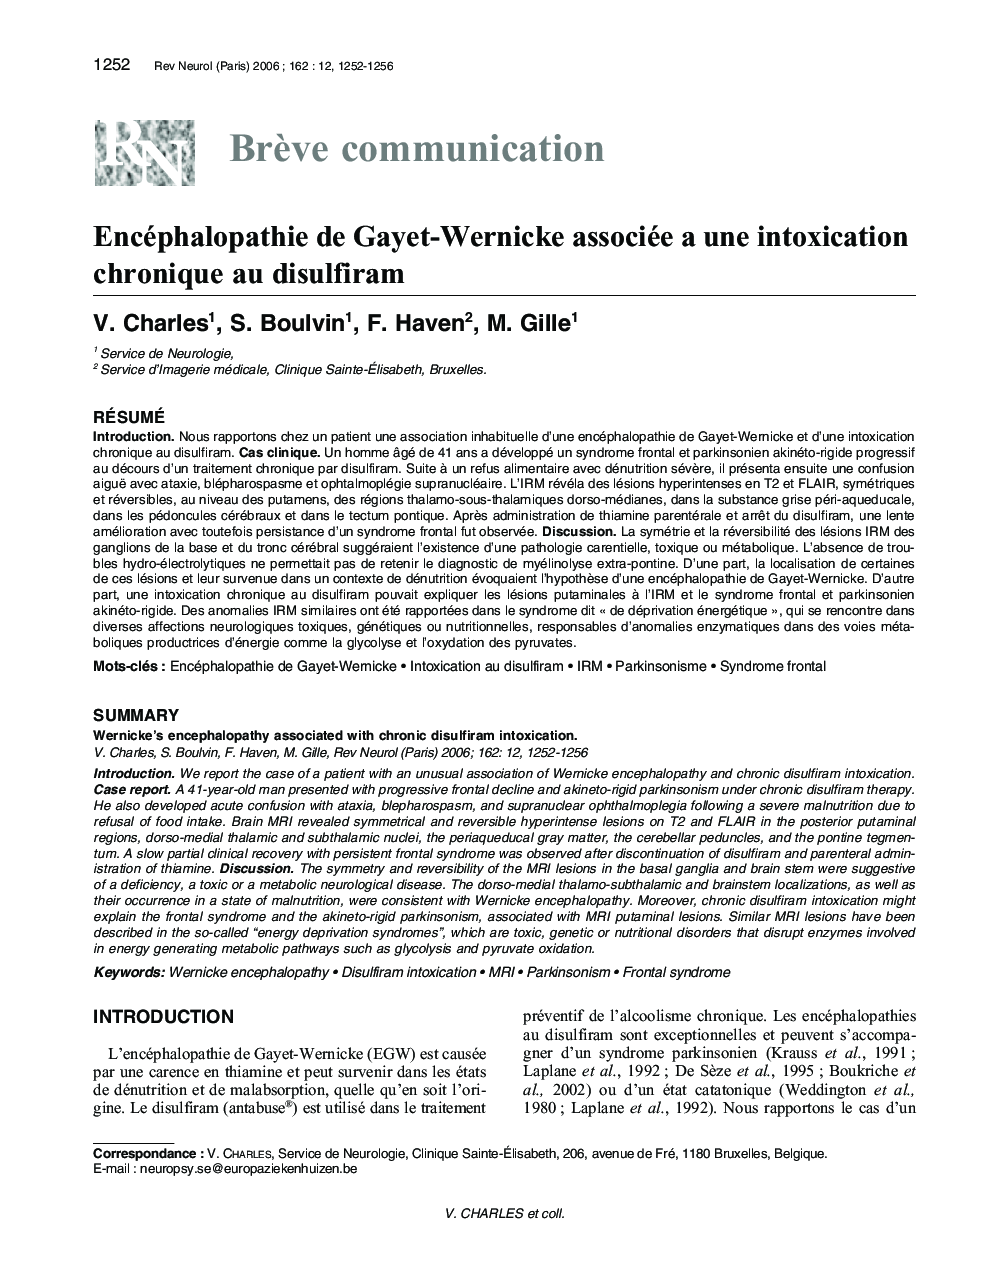 Encéphalopathie de Gayet-Wernicke associée a une intoxication chronique au disulfiram